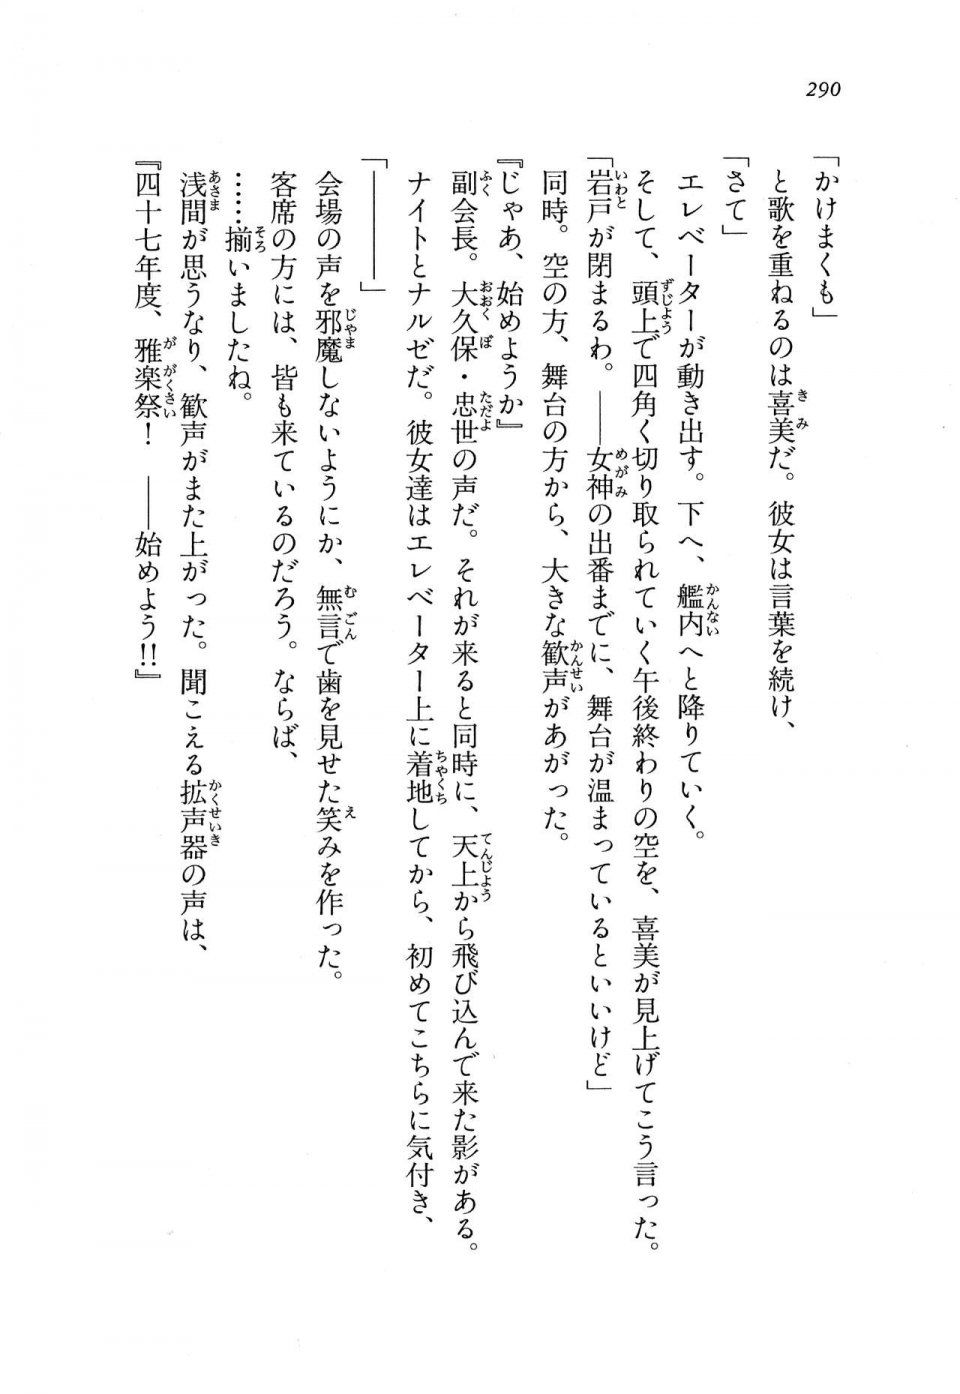 Kyoukai Senjou no Horizon BD Special Mininovel Vol 8(4B) - Photo #294